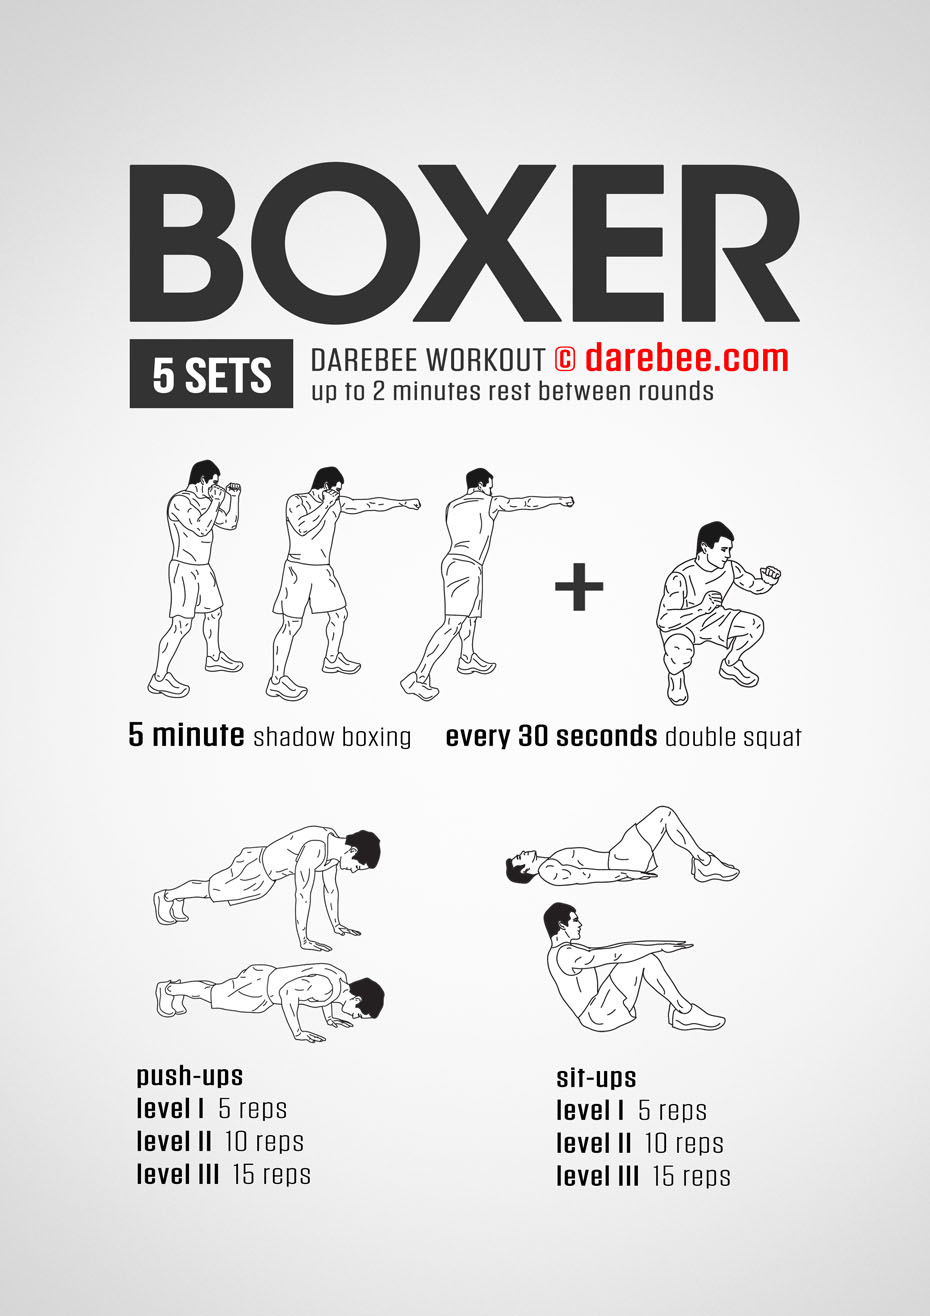 T me ups boxing. DAREBEE Boxer Workout. План тренировок бокс. План тренировки боксера. Упражнения для бокса.